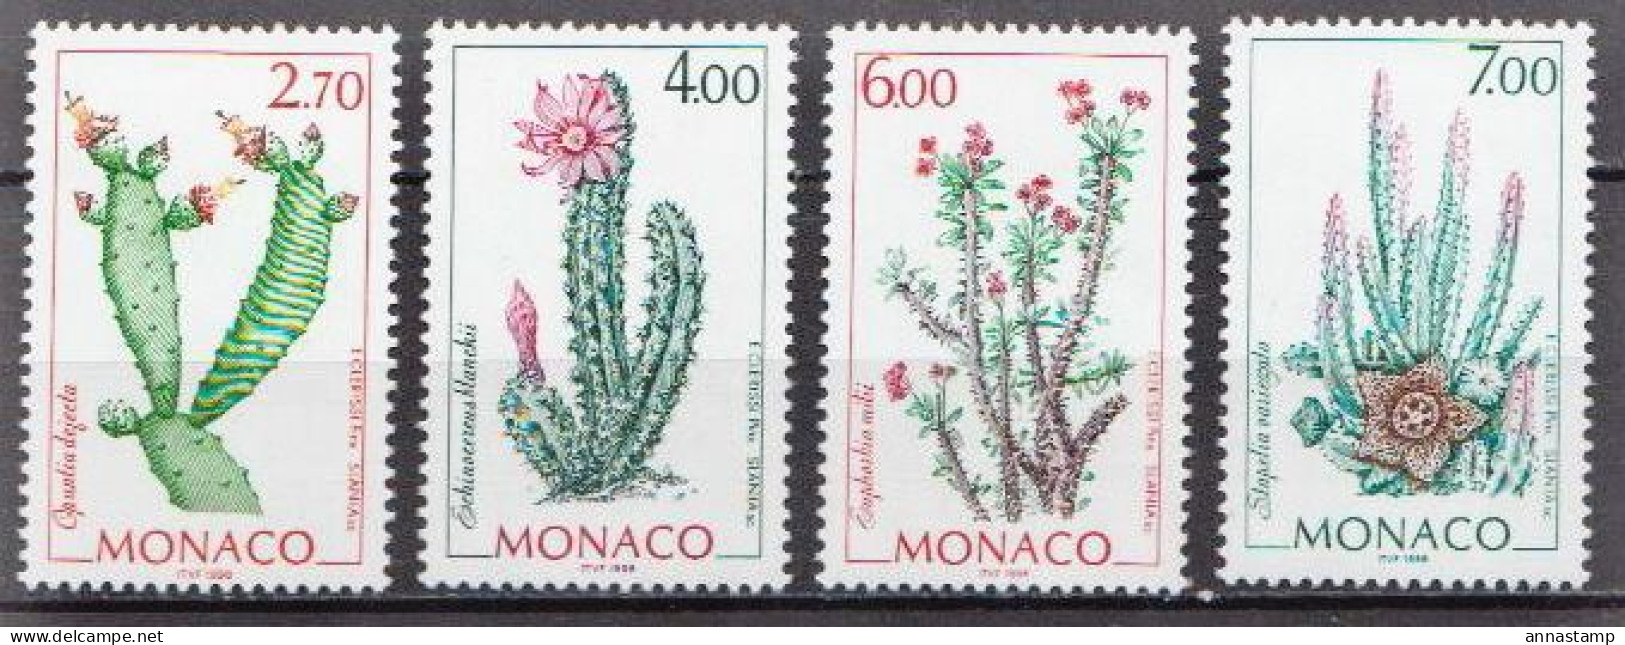 Monaco MNH Set - Sukkulenten